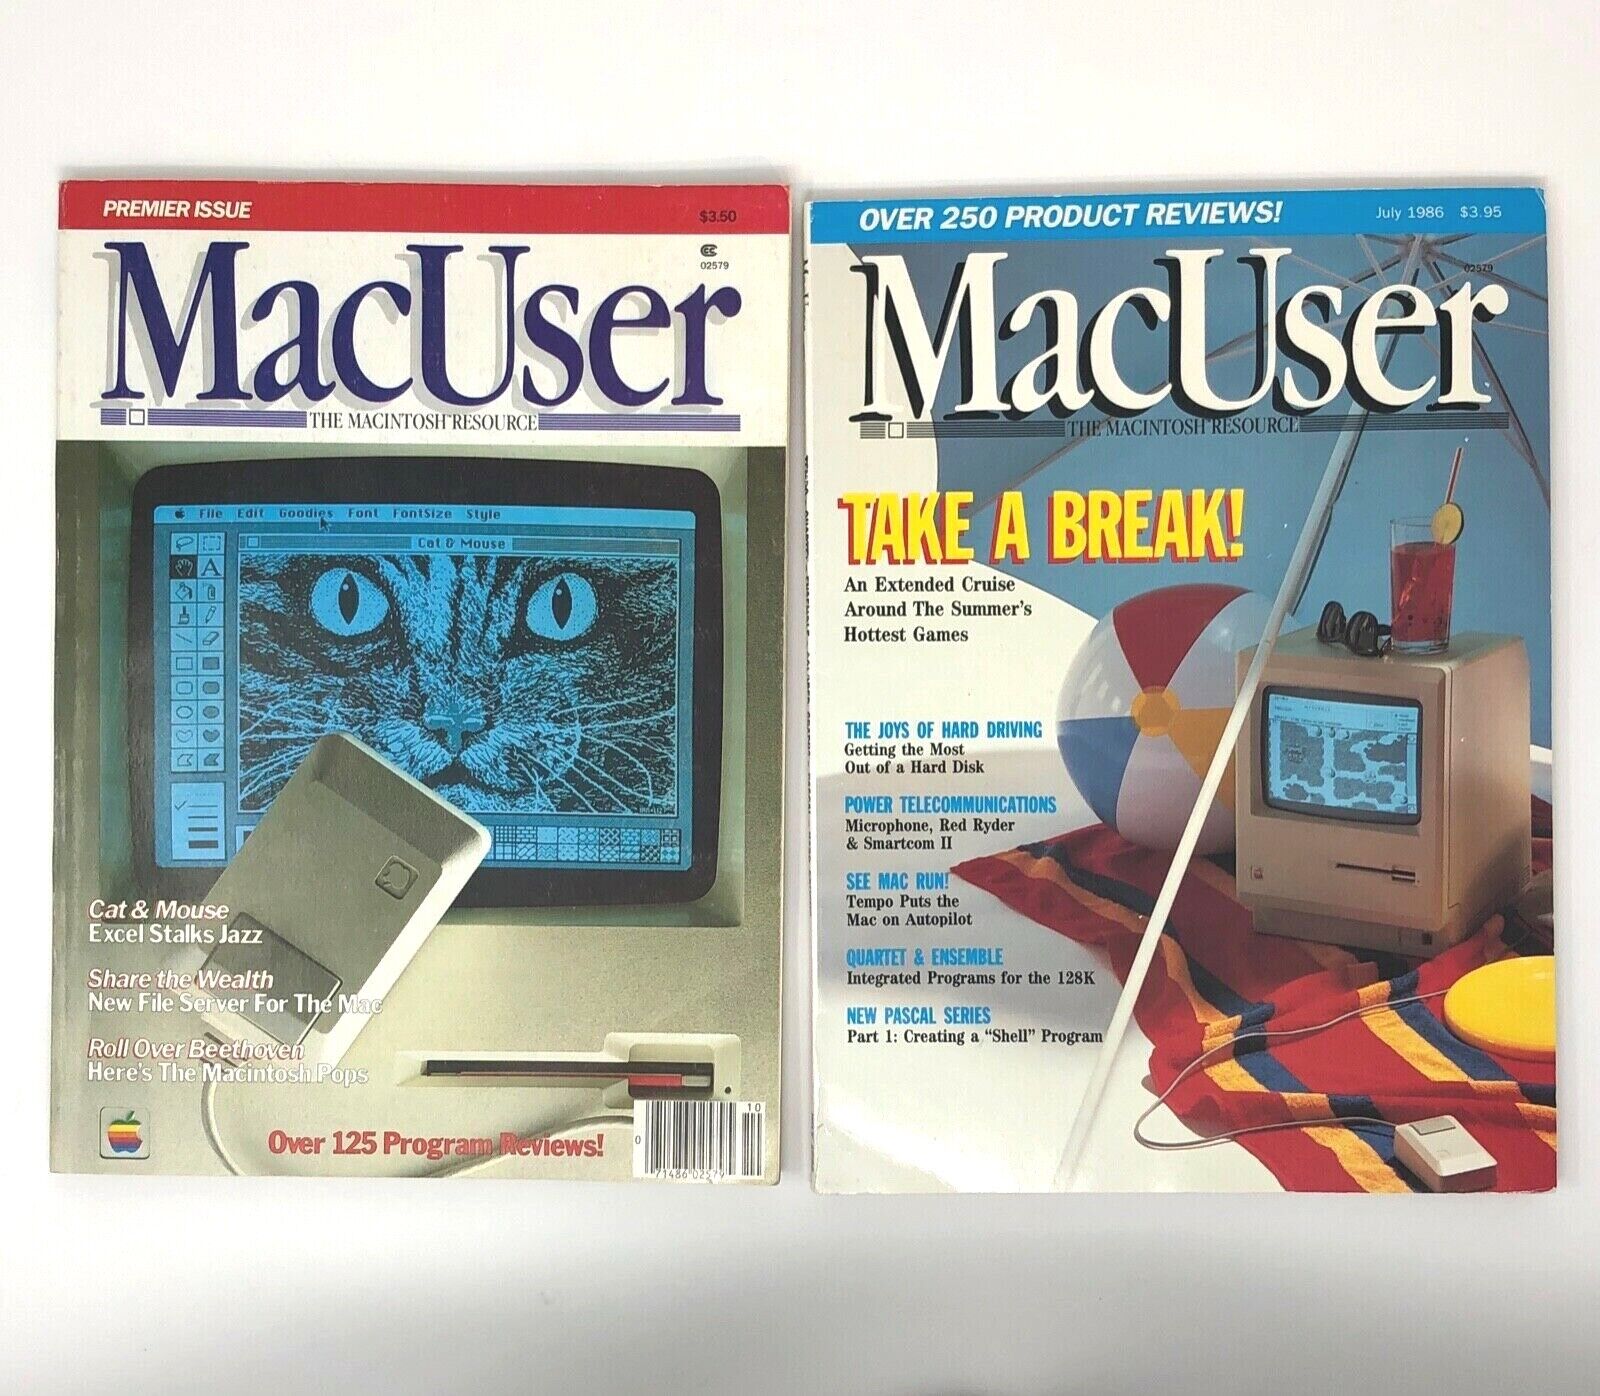 MacUser Magazine **October 1985 Premier Issue** + July 1986 Issue *RARE FIND*